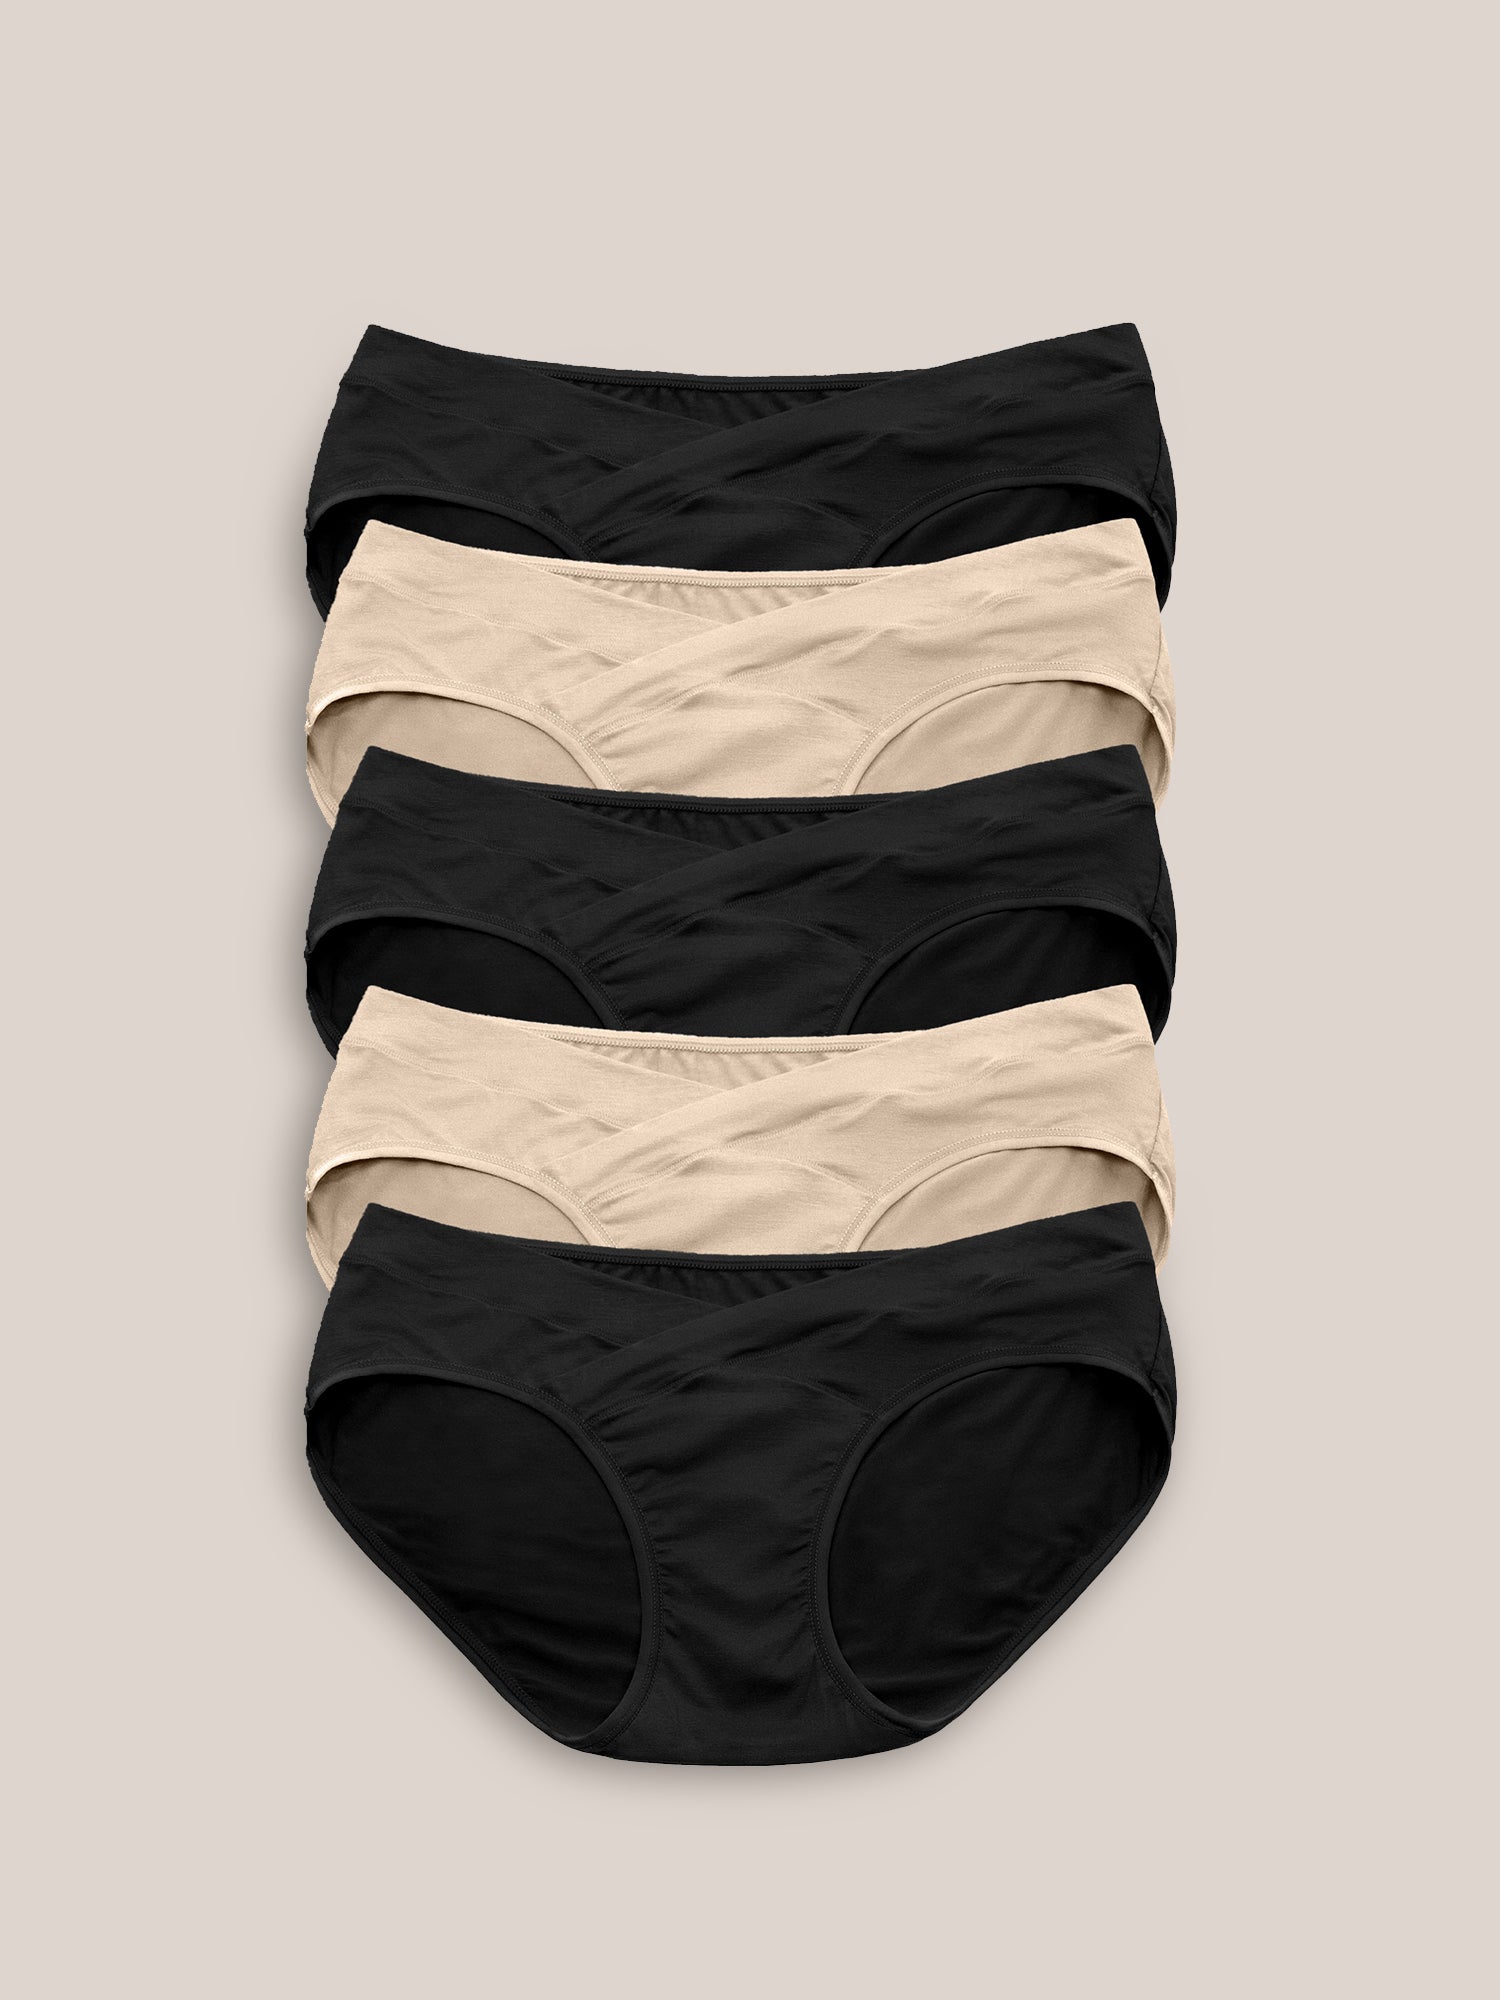 Shopping Guide: Organic Women's Underwear - One Part Sunshine